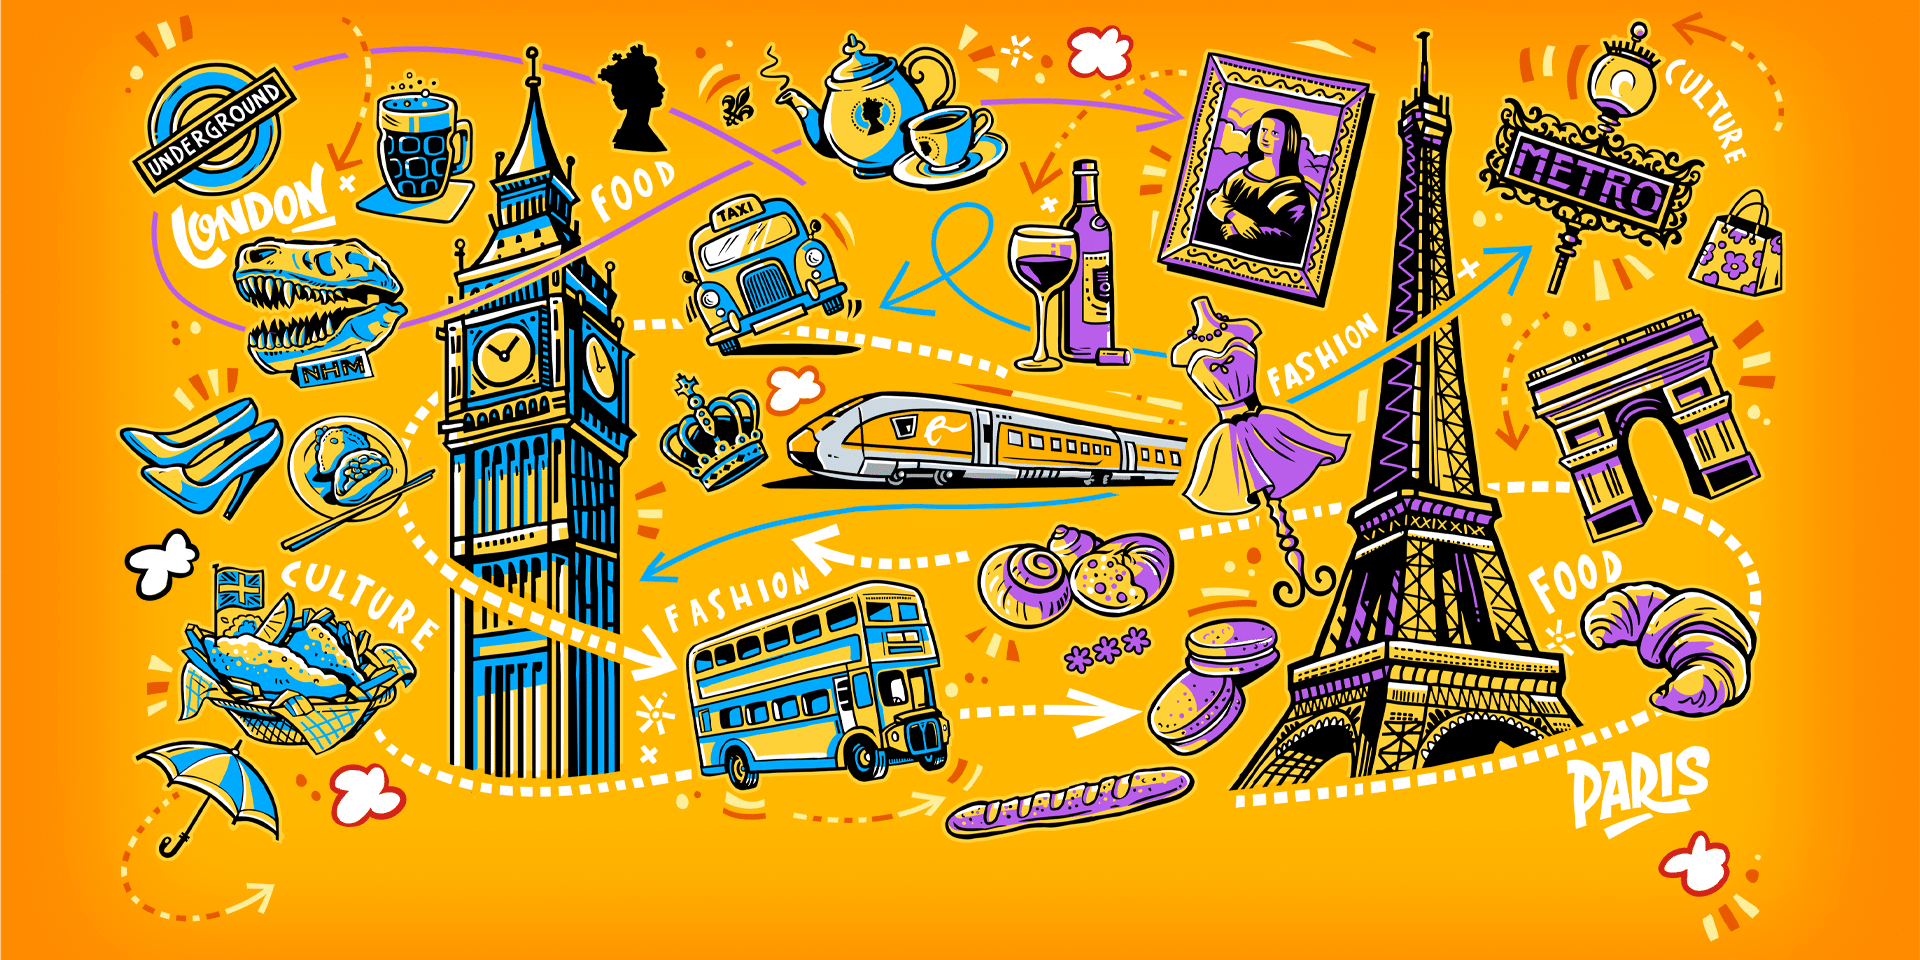 London and Paris: 2 Amazing Cities. 1 Epic Trip.